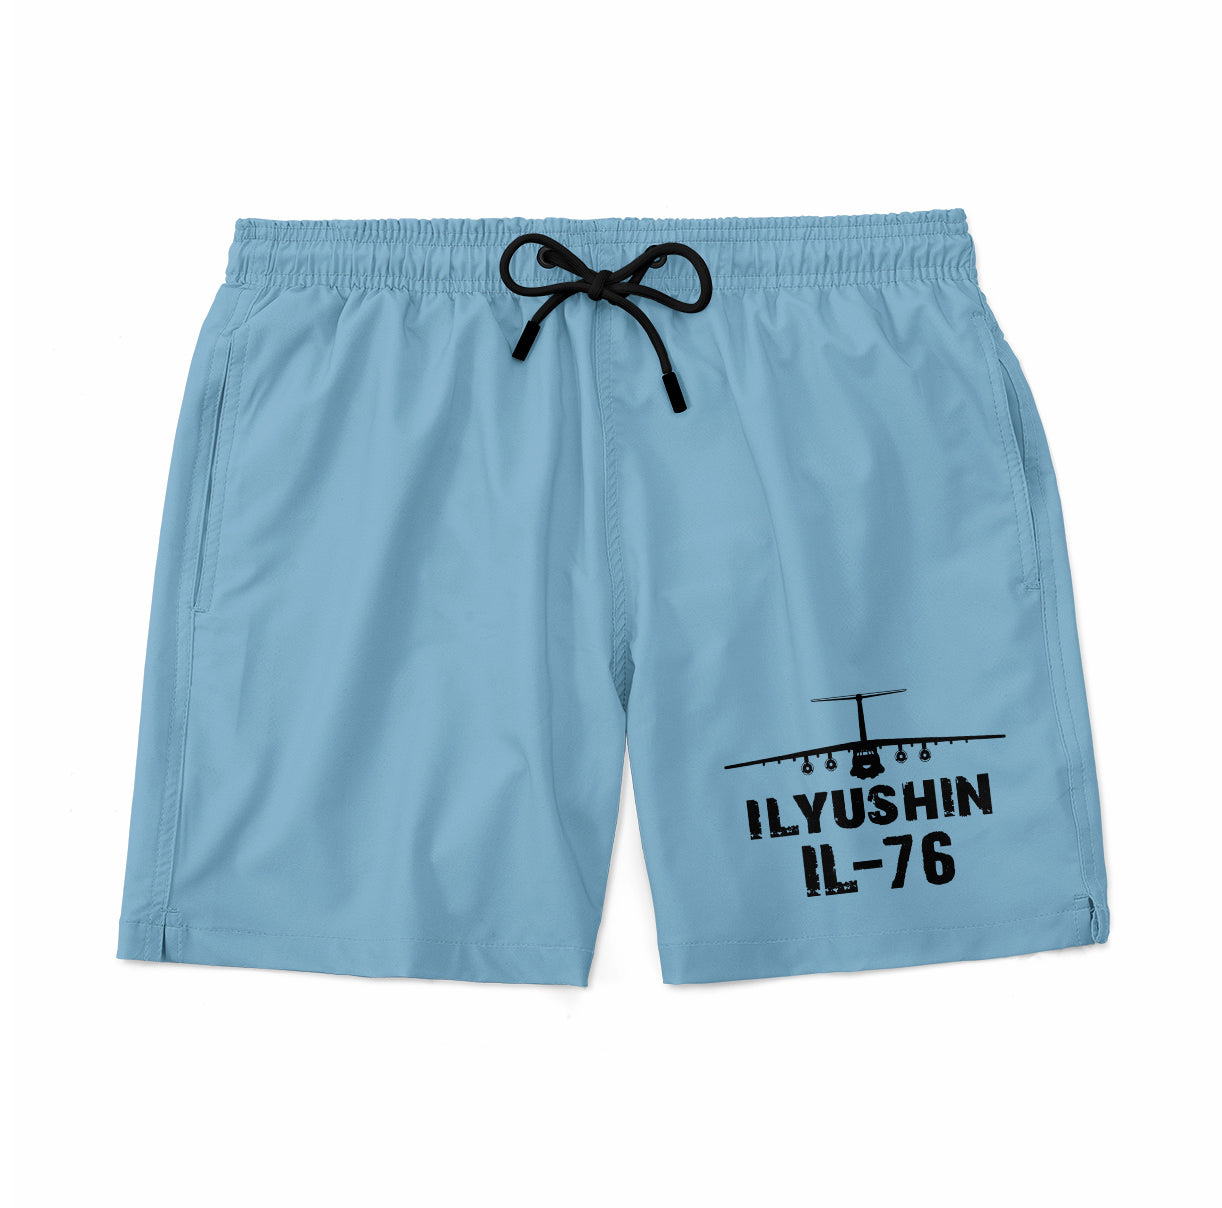 ILyushin IL-76 & Plane Designed Swim Trunks & Shorts